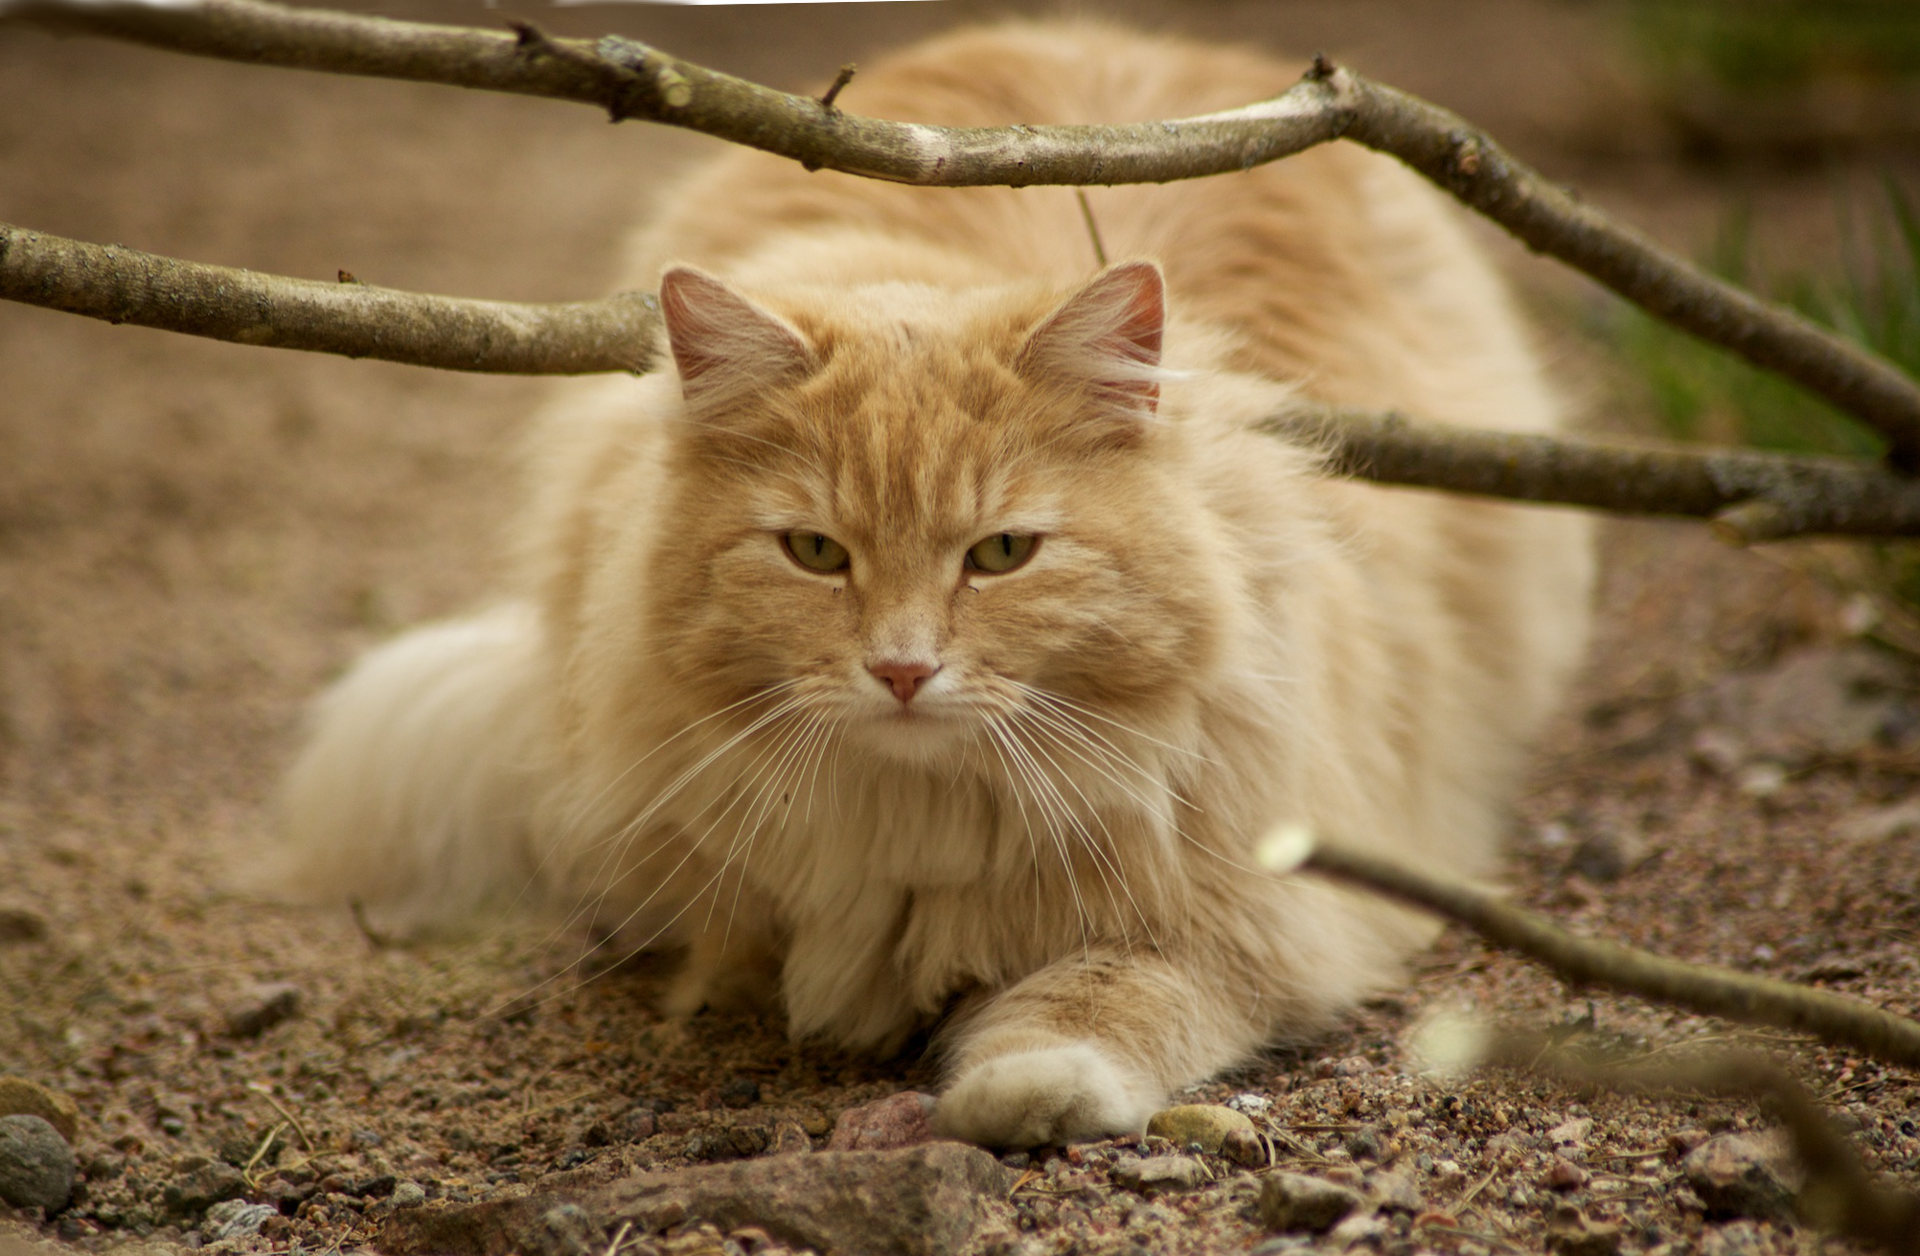 Kot norweski leśny